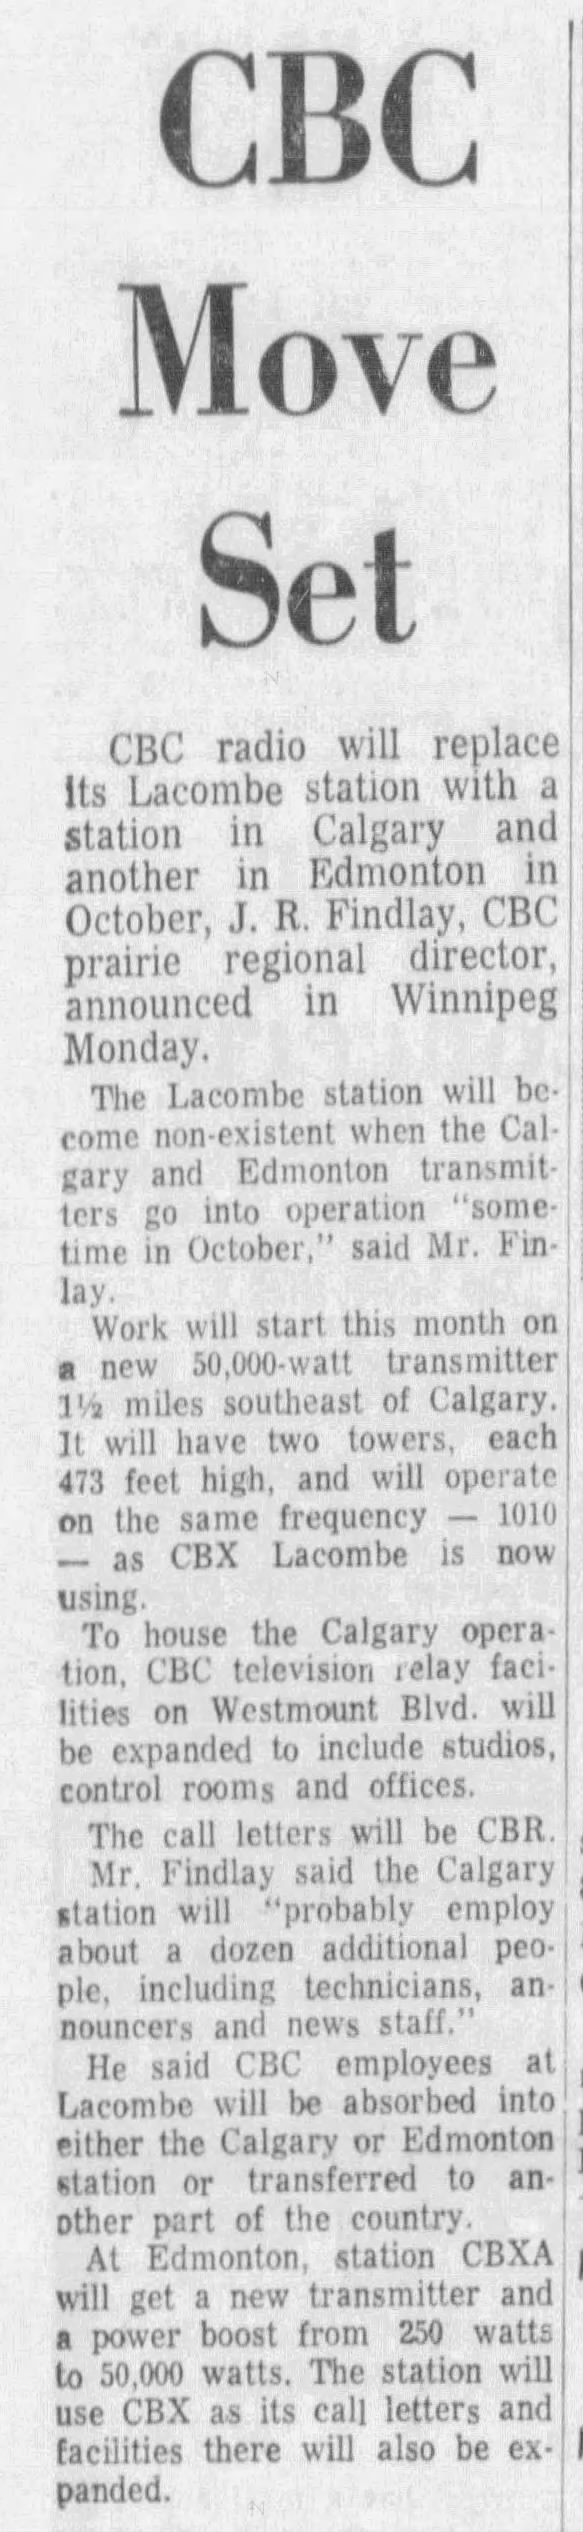 CBC to move Lacombe radio transmitter